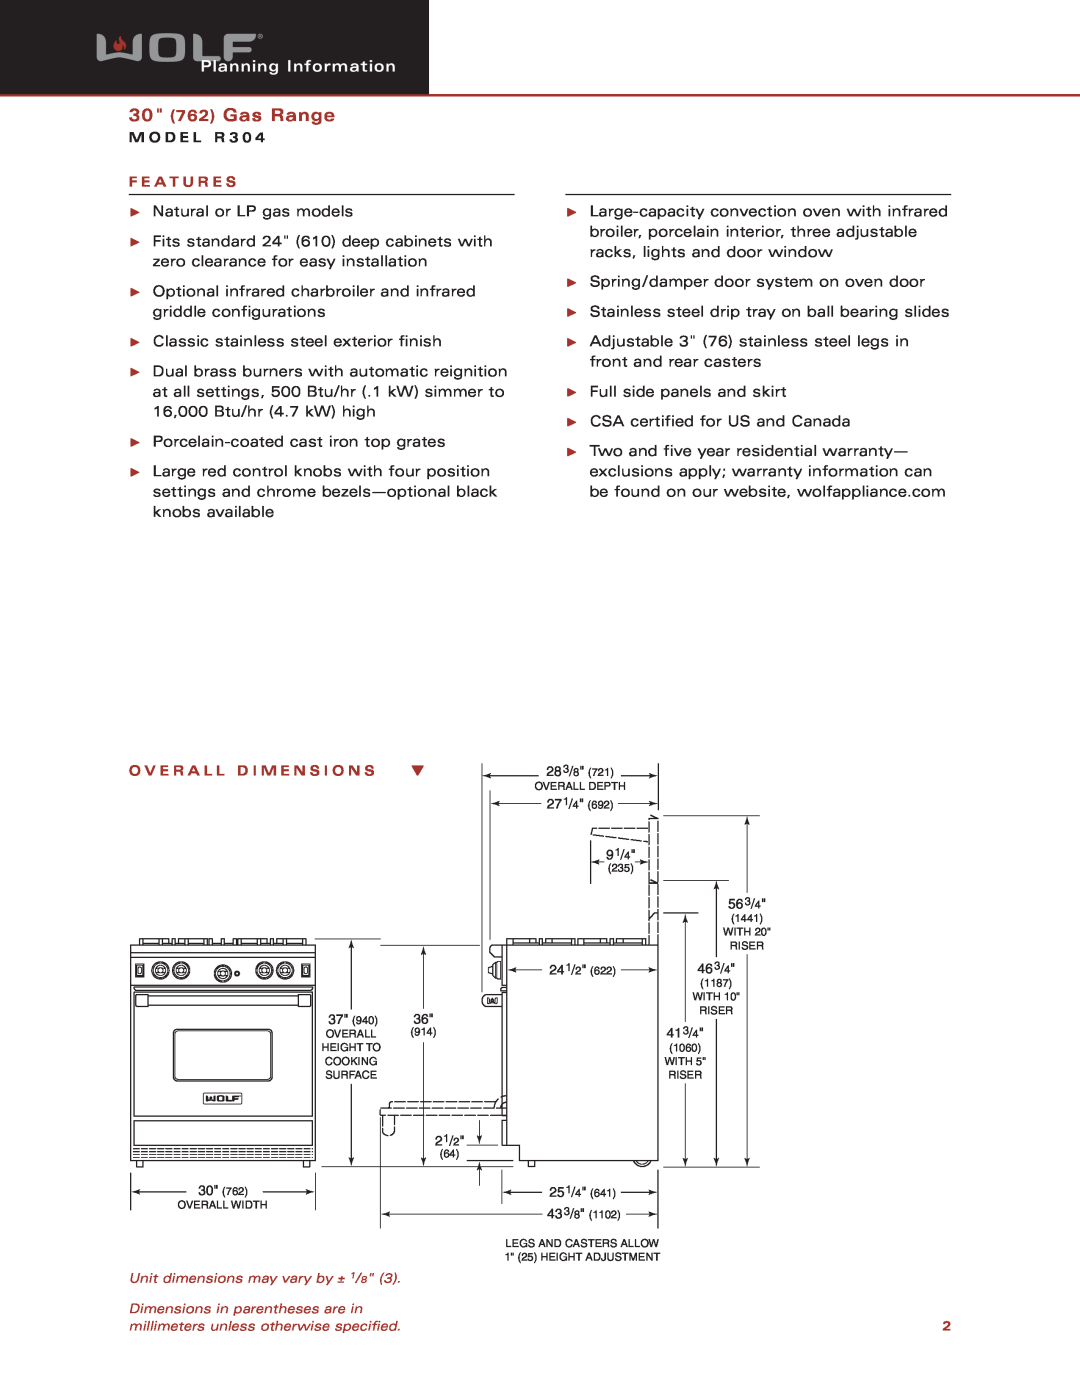 Wolf Appliance Company R304 dimensions 30 762 Gas Range, Planning Information, M O D E L R, F E A T U R E S 